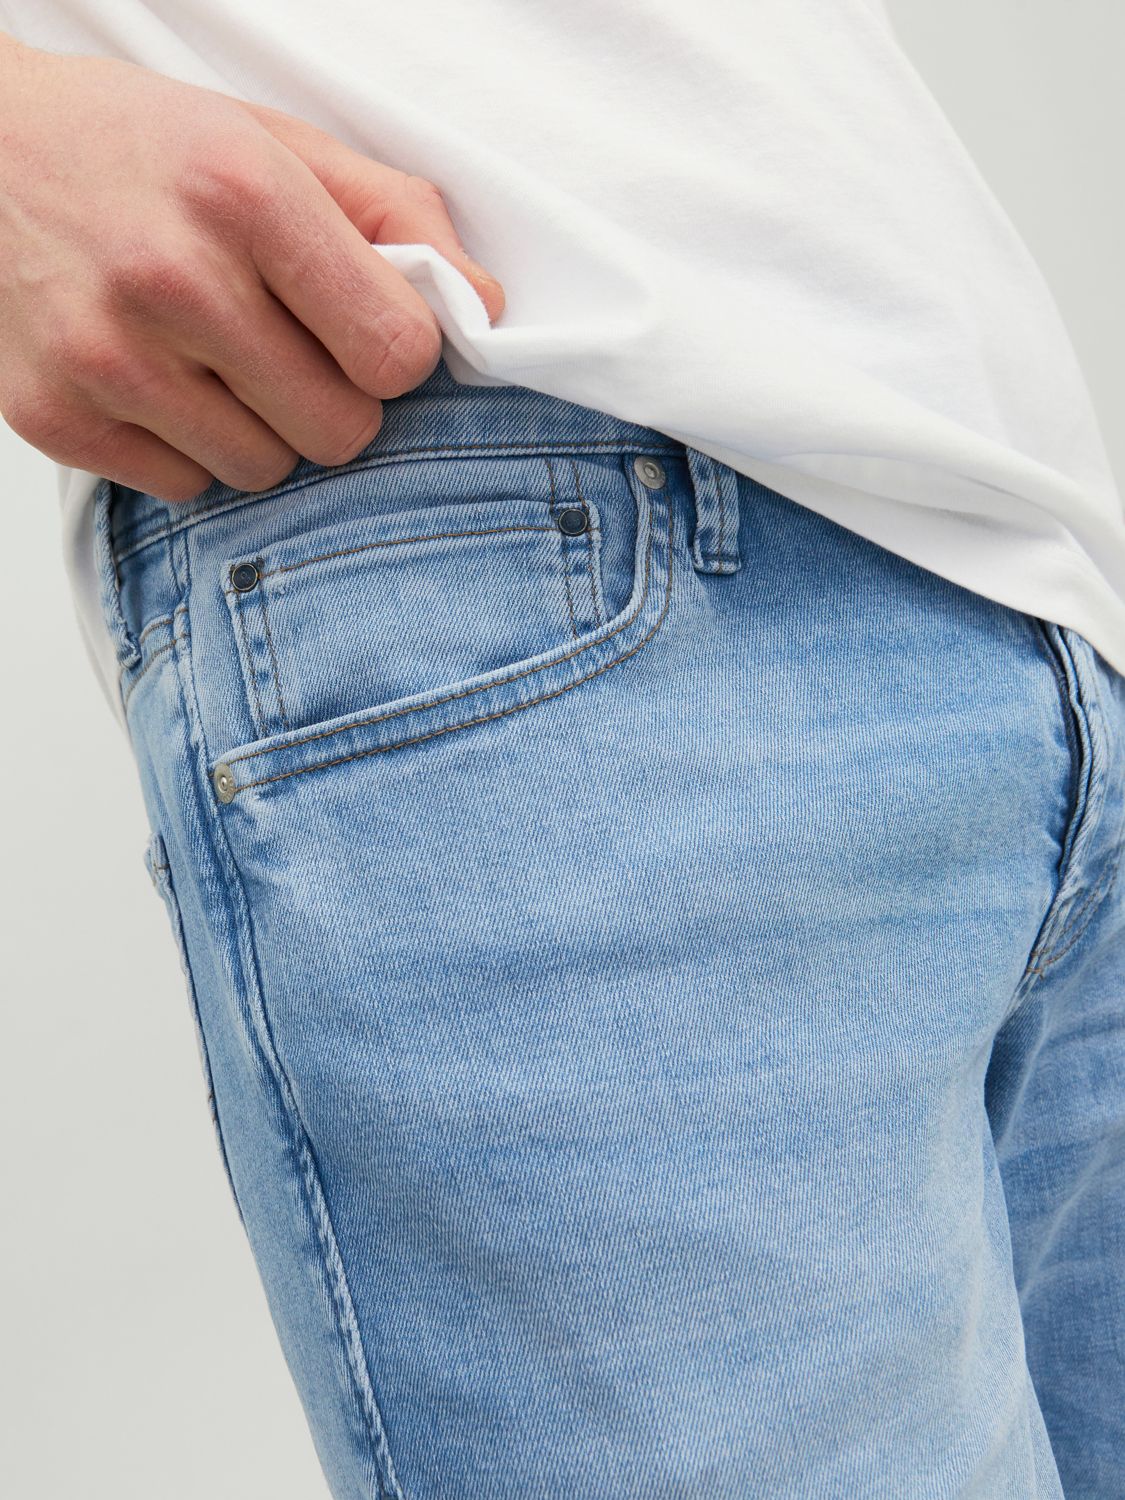 Trendy and stunning Jack Jones Jeans for men